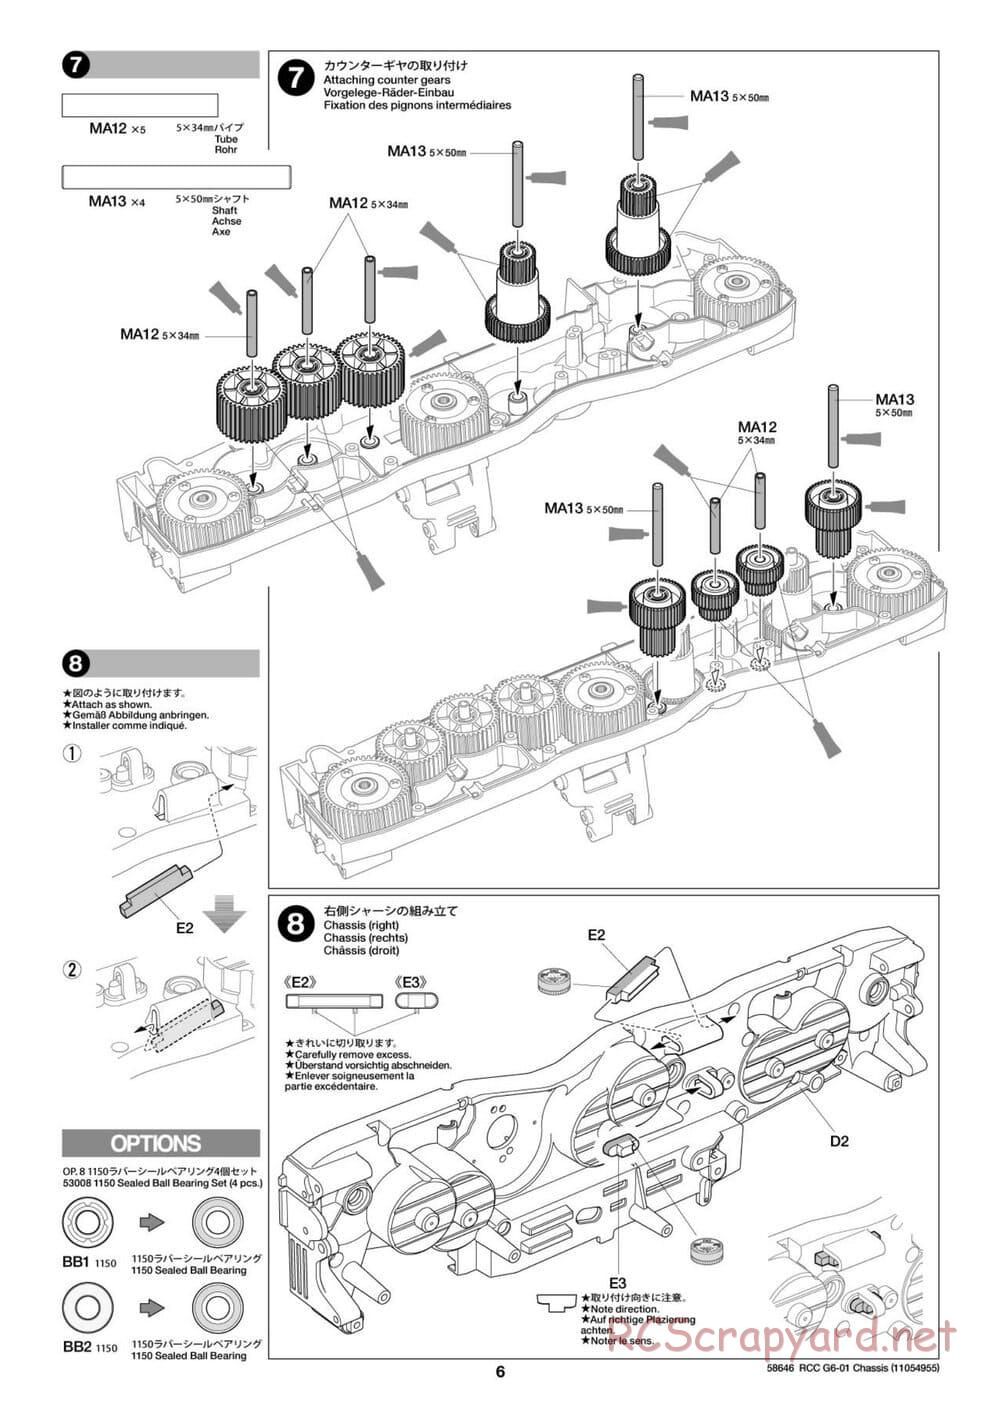 Tamiya - Konghead 6x6 - G6-01 Chassis - Manual - Page 6